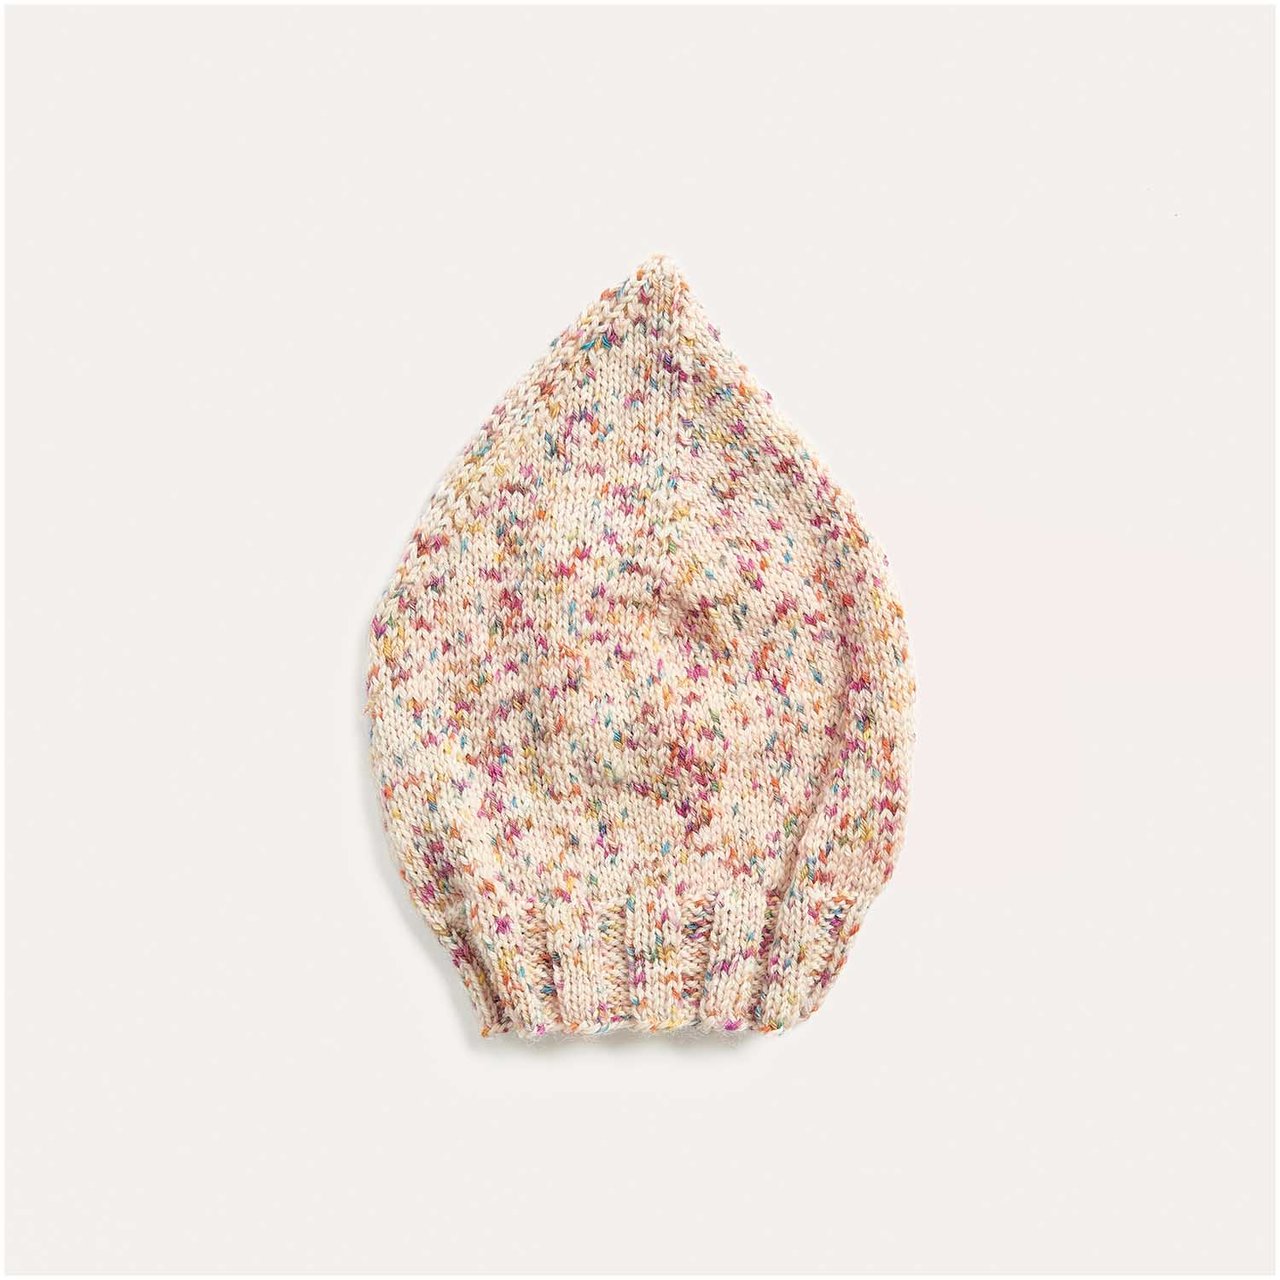 Strickset Mütze Modell 10 aus Baby Merino Nr. 02 1-2 Jahre earthy multicolor